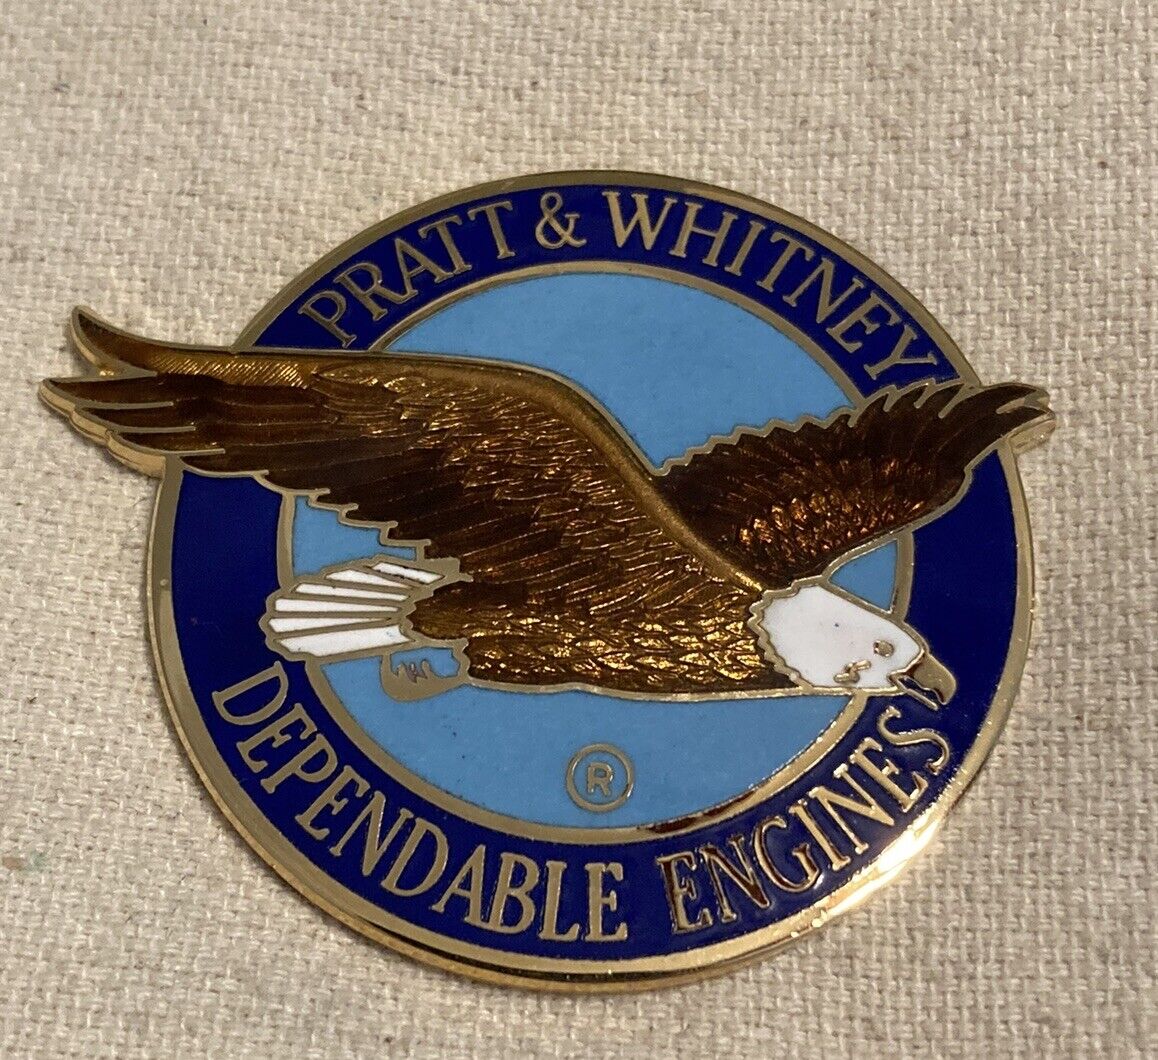 VINTAGE PRATT & WHITNEY AIRCRAFT DEPENDABLE ENGINES ENAMEL ON BRASS EMBLEM